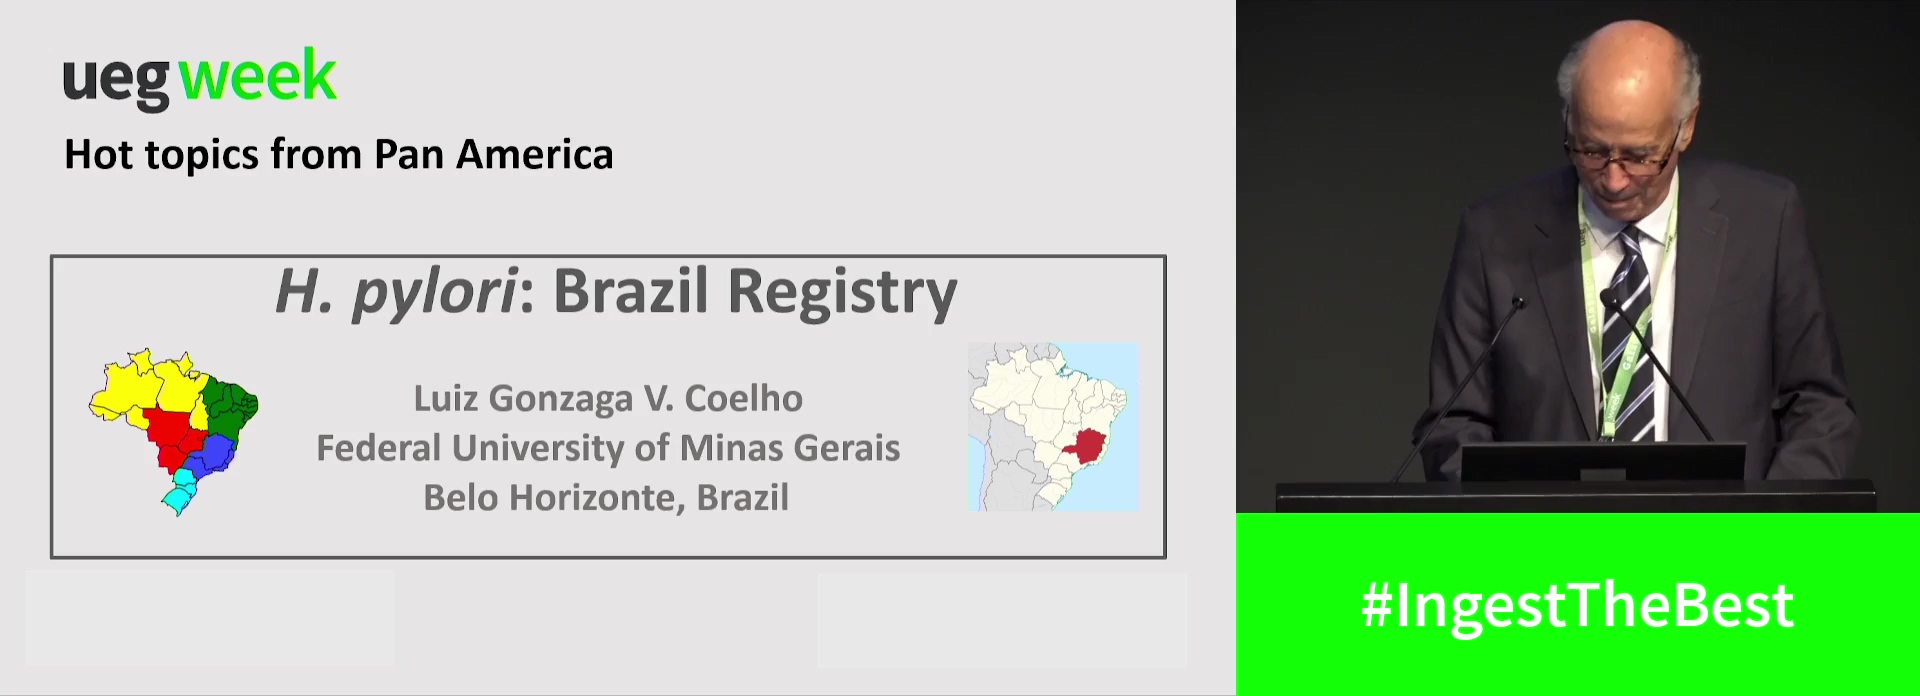 H. pylori: Brazil Registry